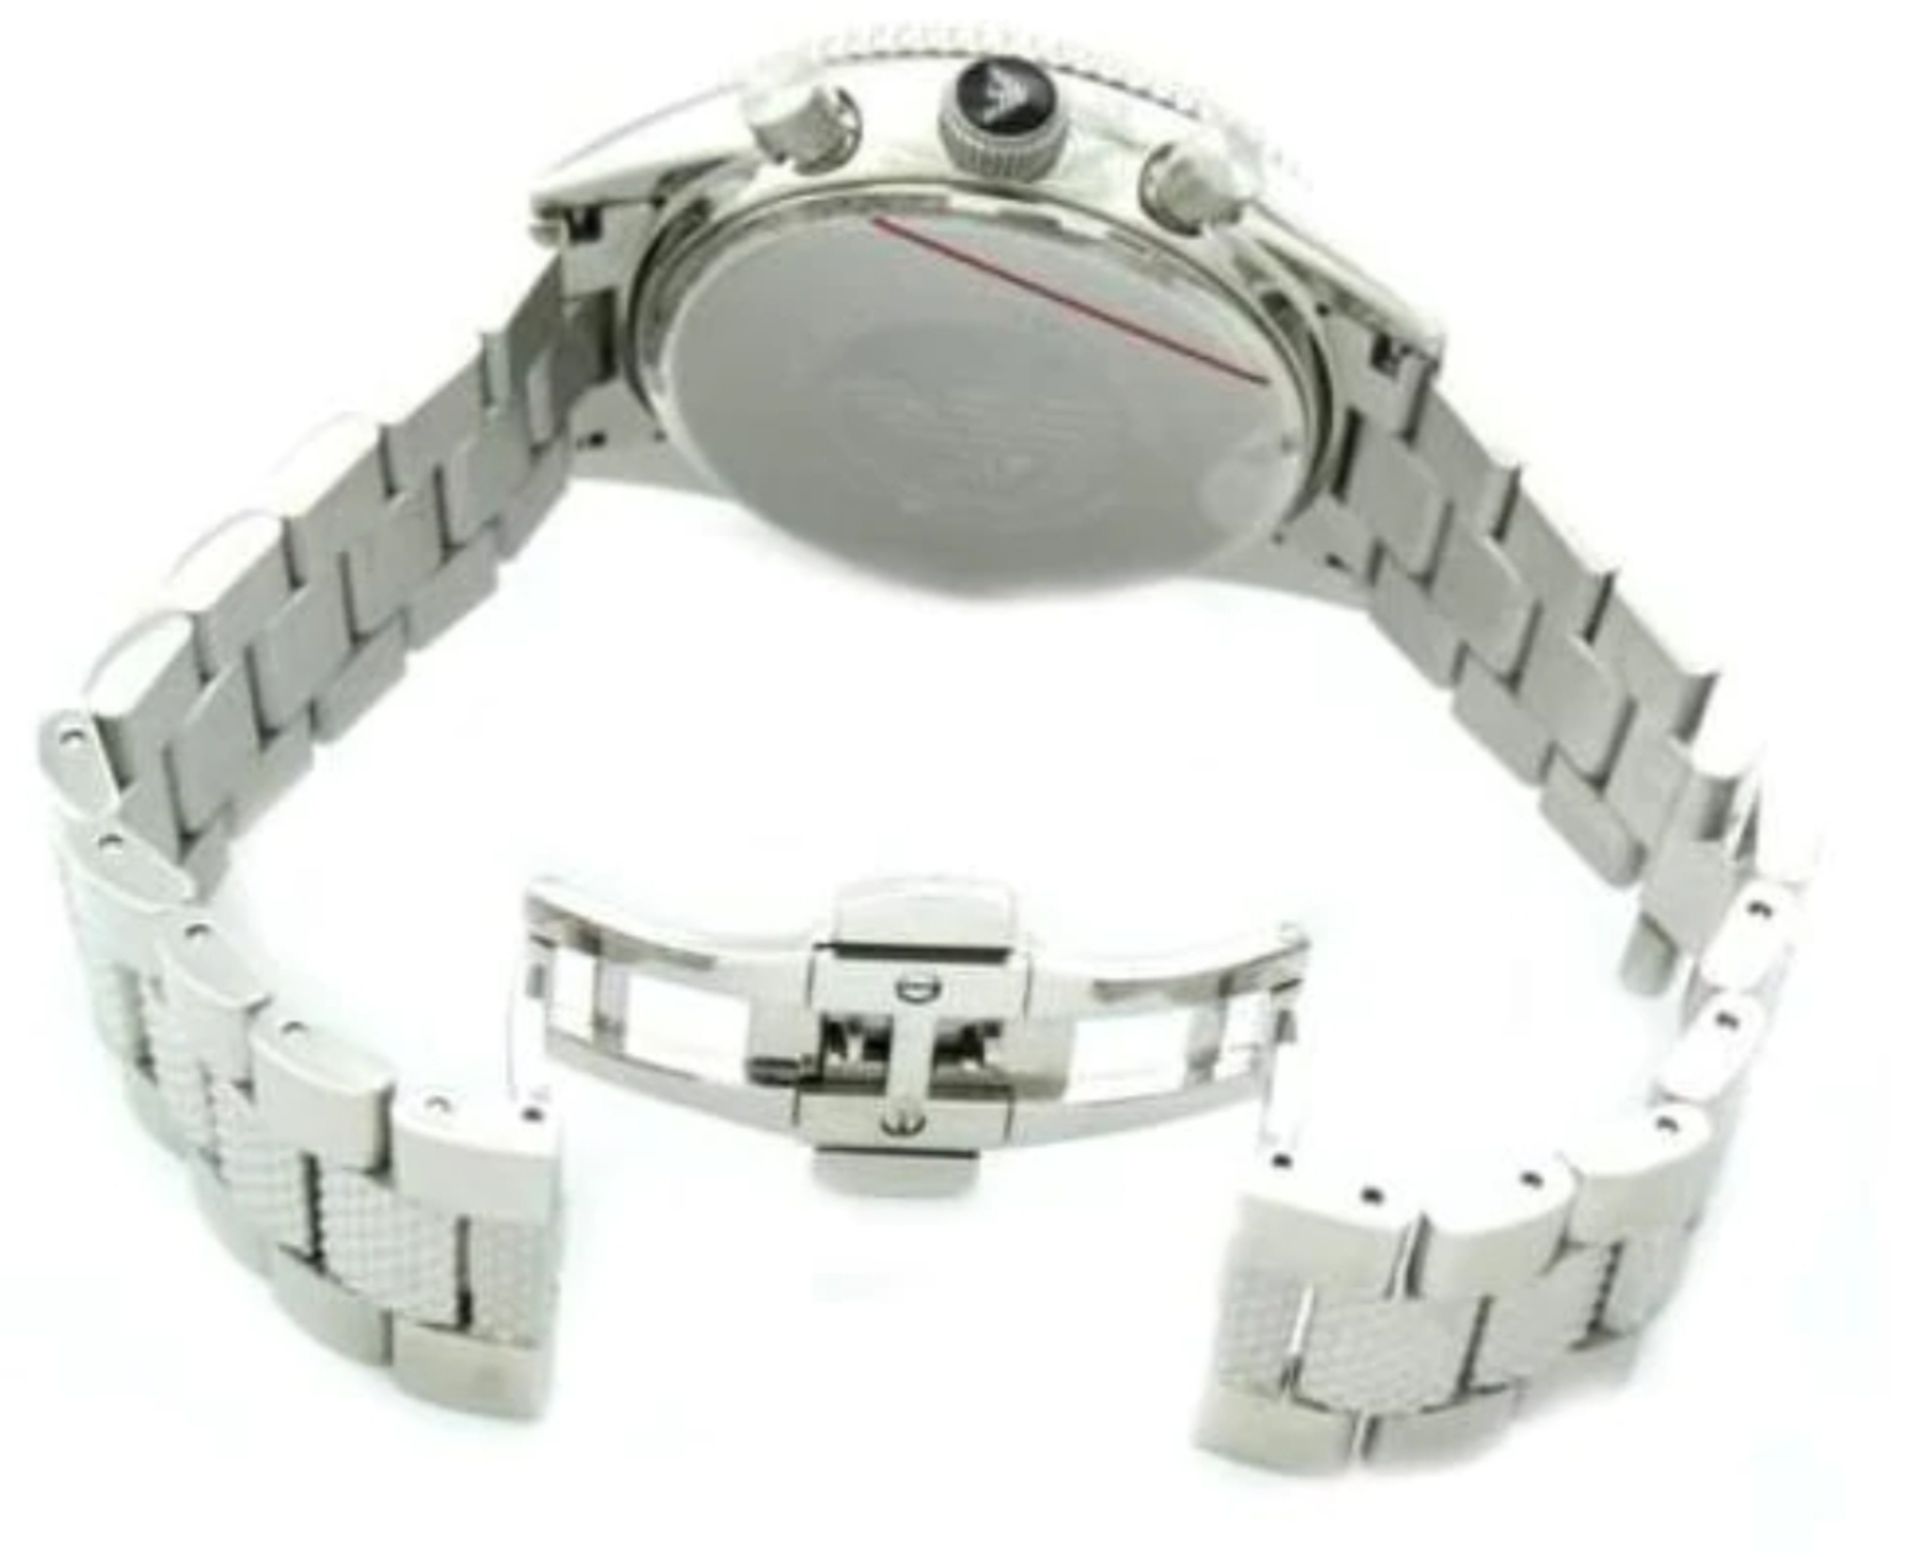 Emporio Armani AR5855 Men's Black Dial Silver Tone Bracelet Quartz Chronograph Watch - Image 7 of 8